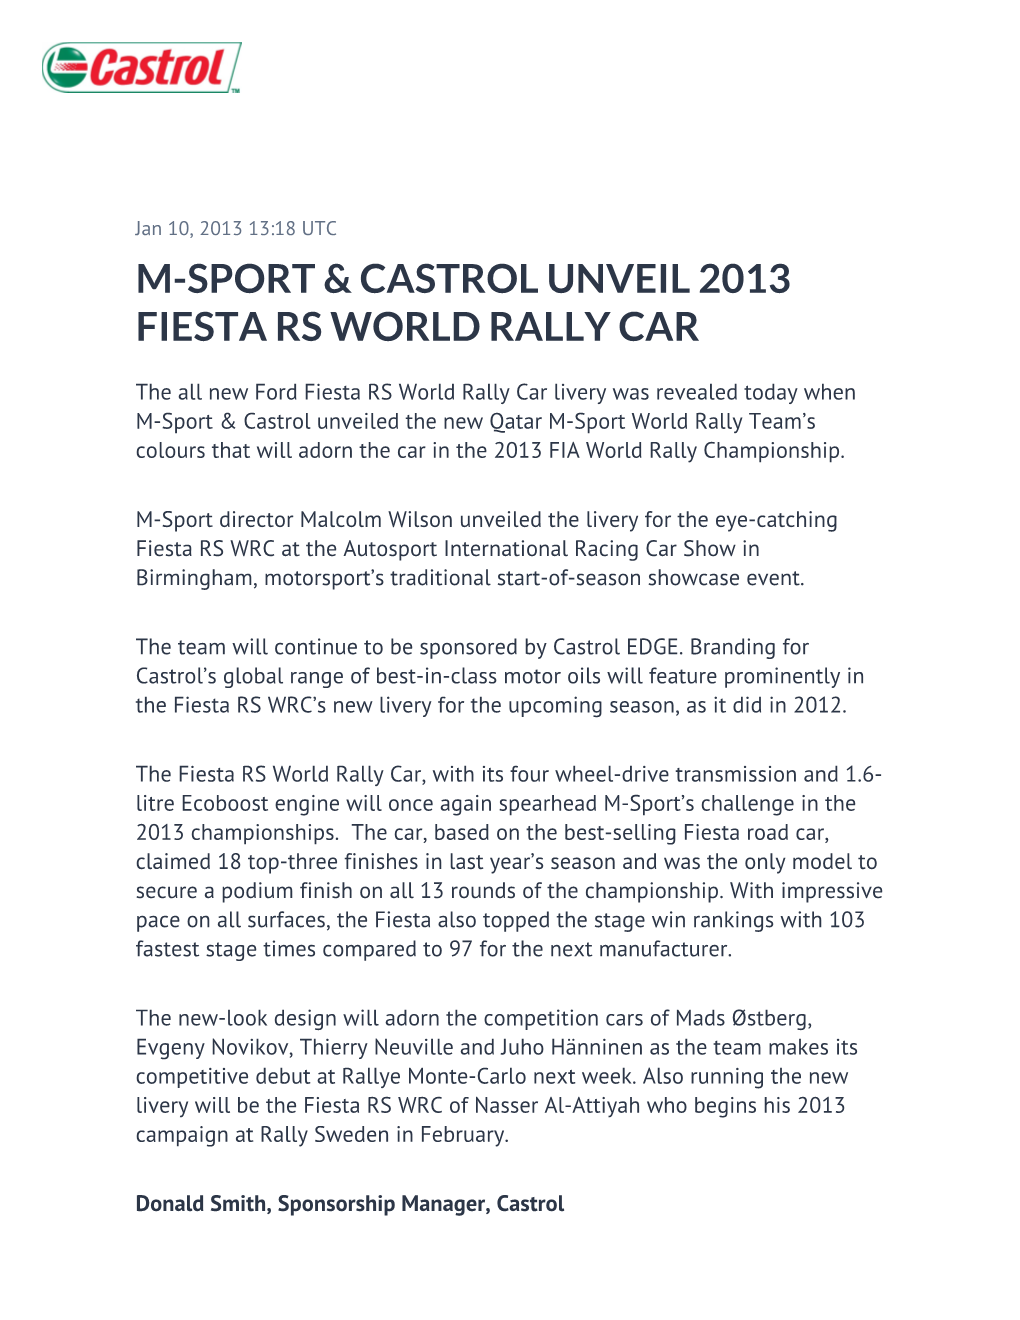 M-Sport & Castrol Unveil 2013 Fiesta Rs World Rally